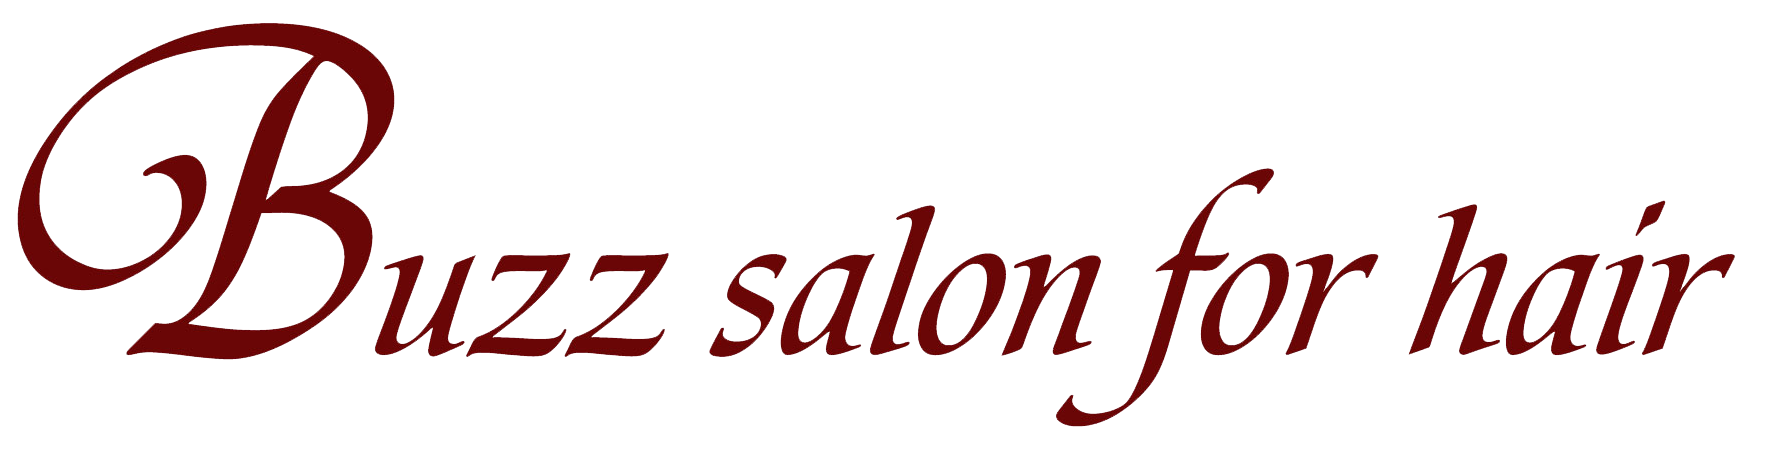 Buzz salon for hair